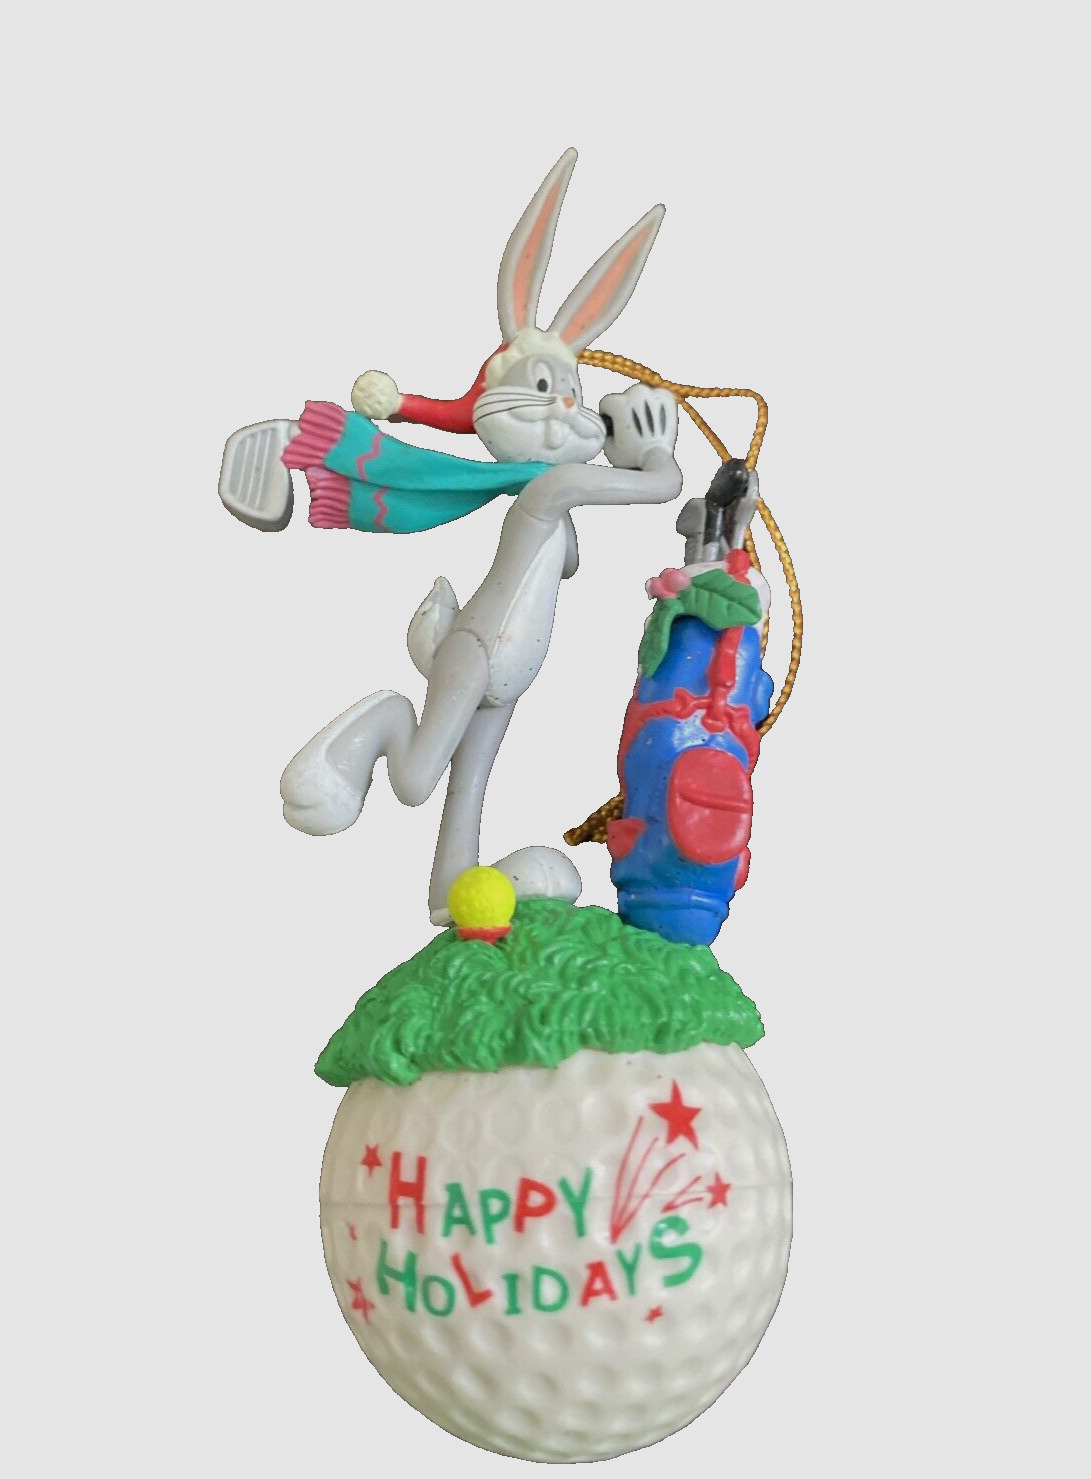 Vintage Bugs Bunny Golf Happy Holidays Christmas Ornament - 1997 Looney Tunes